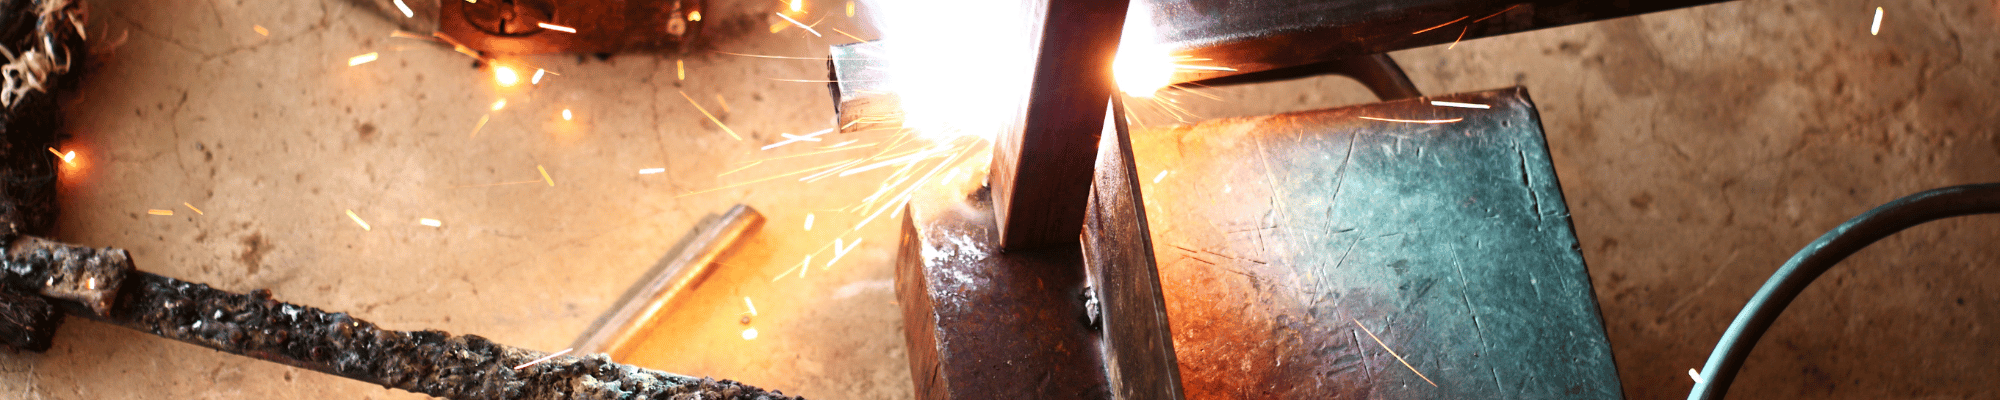 ironworkers metal fabrication